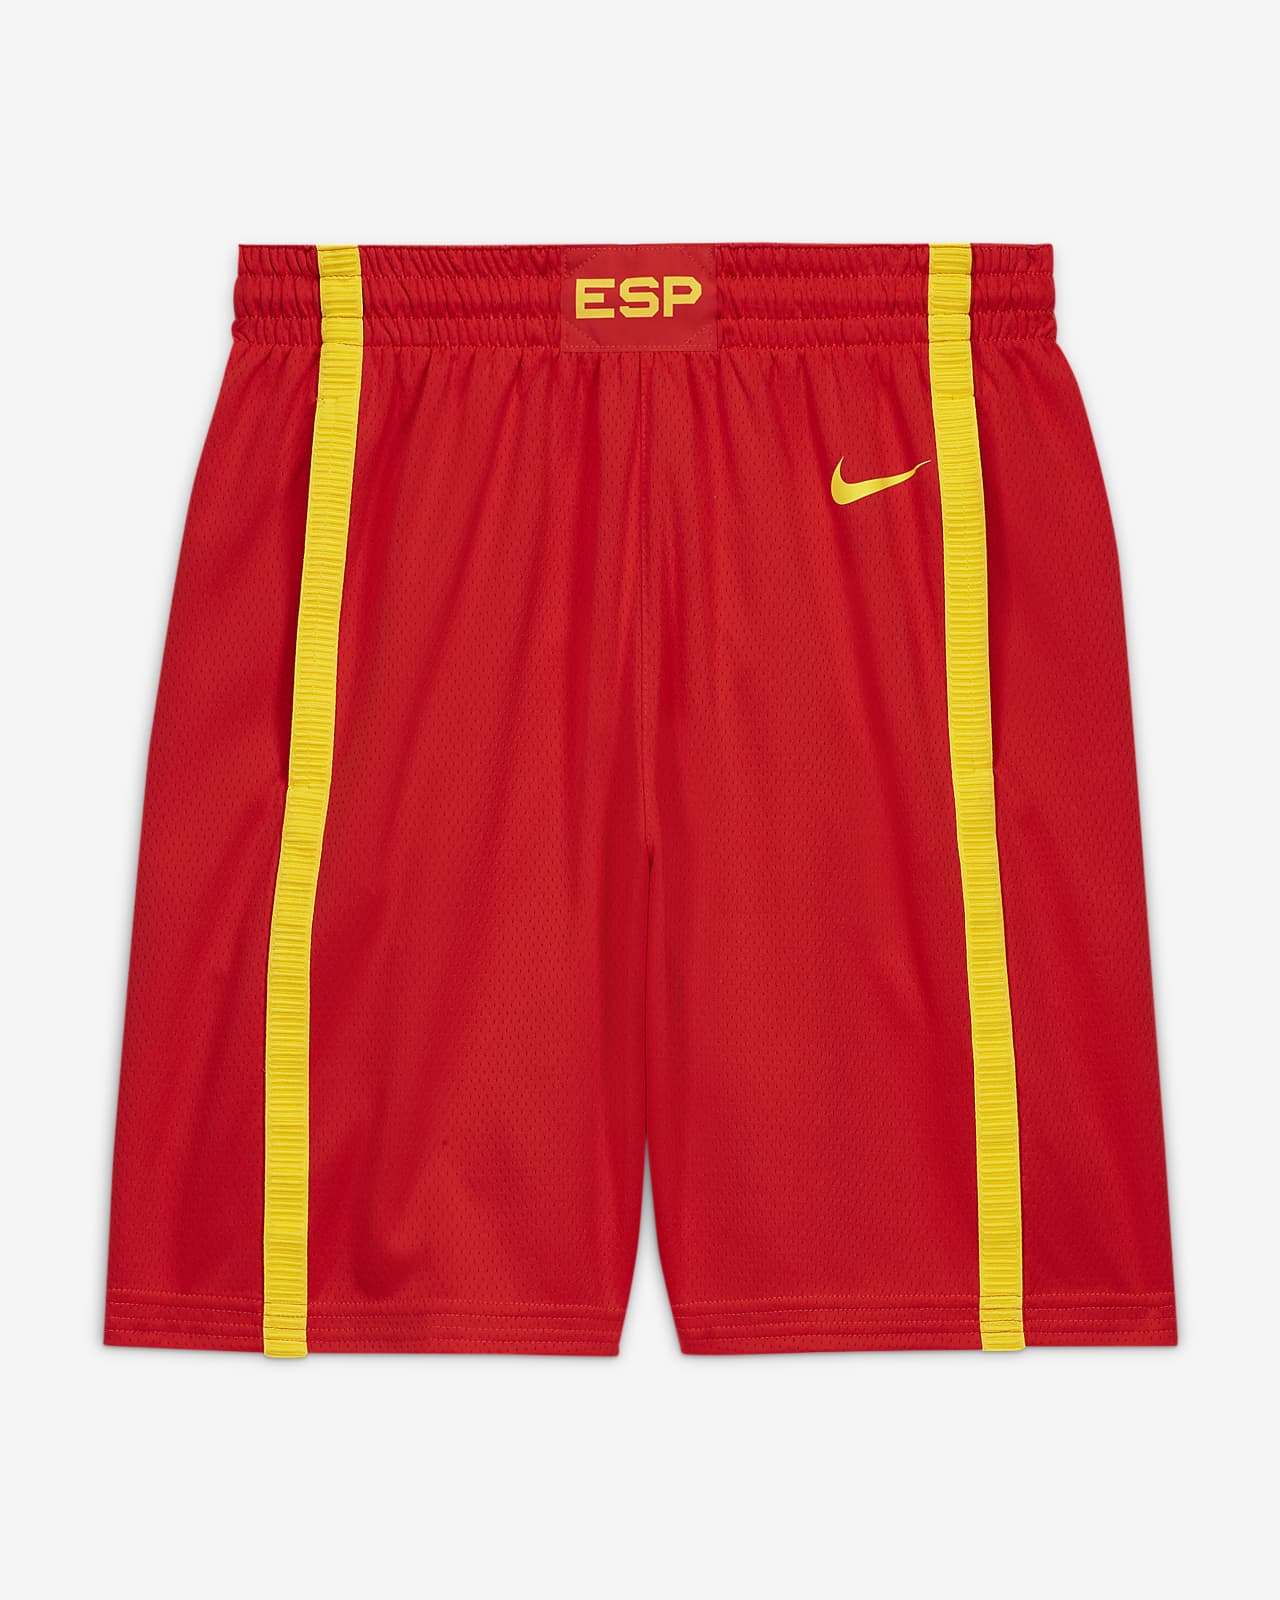 Frenesí segmento Automático Spain Nike (Road) Limited Men's Basketball Shorts. Nike LU